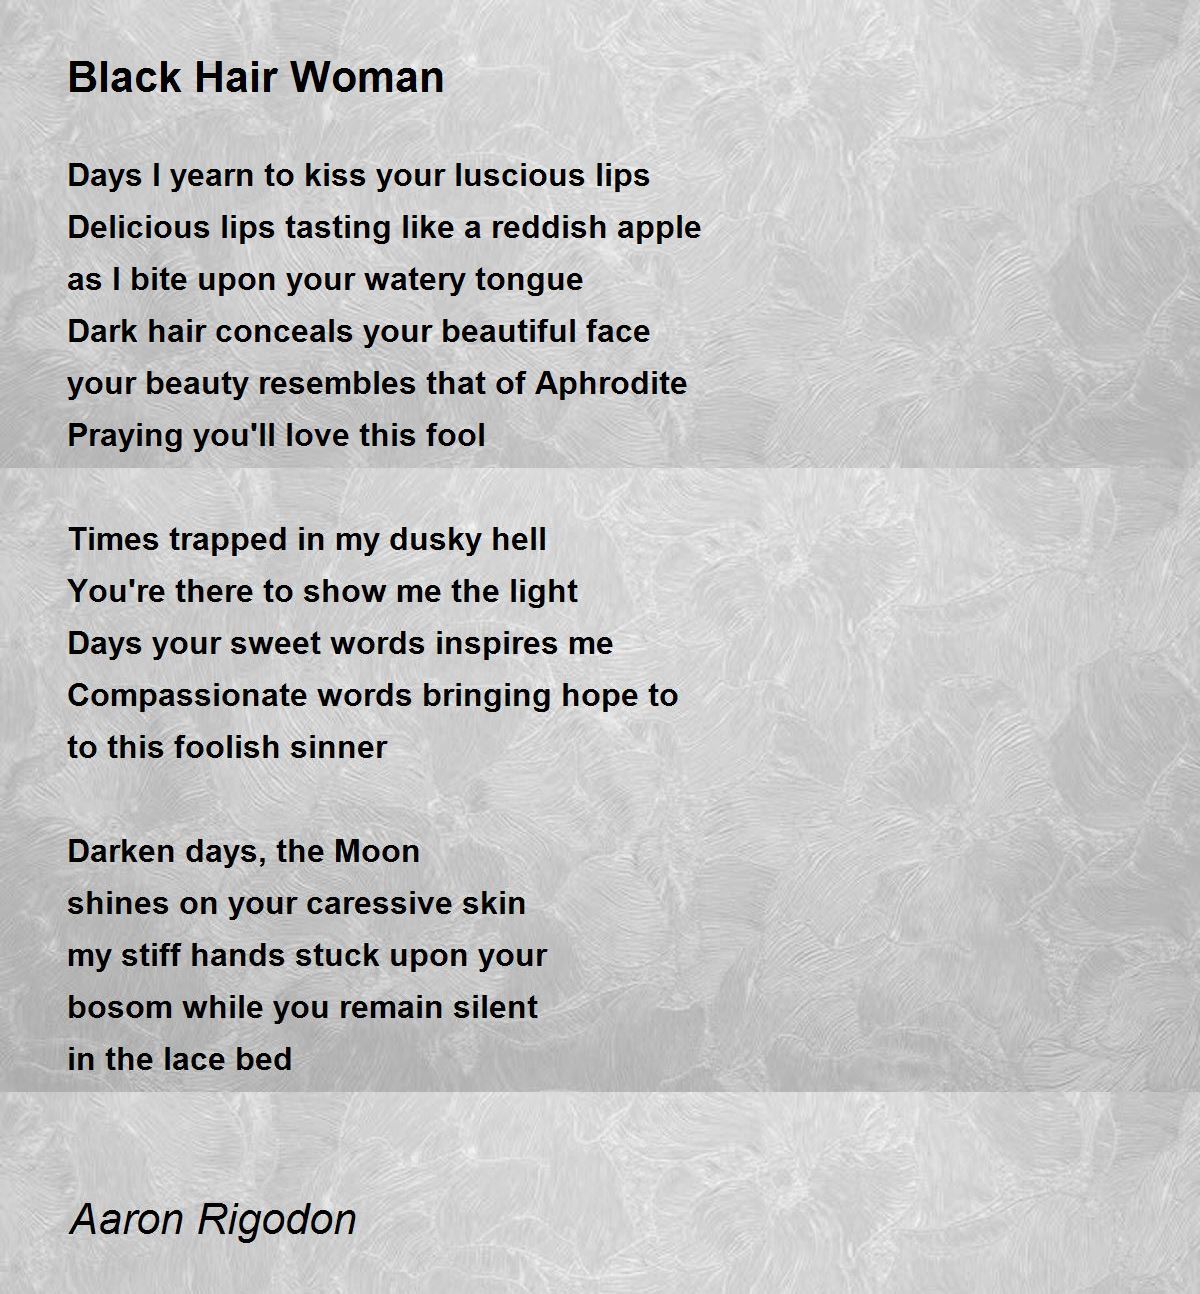 Black Hair Woman - Black Hair Woman Poem by Aaron Rigodon